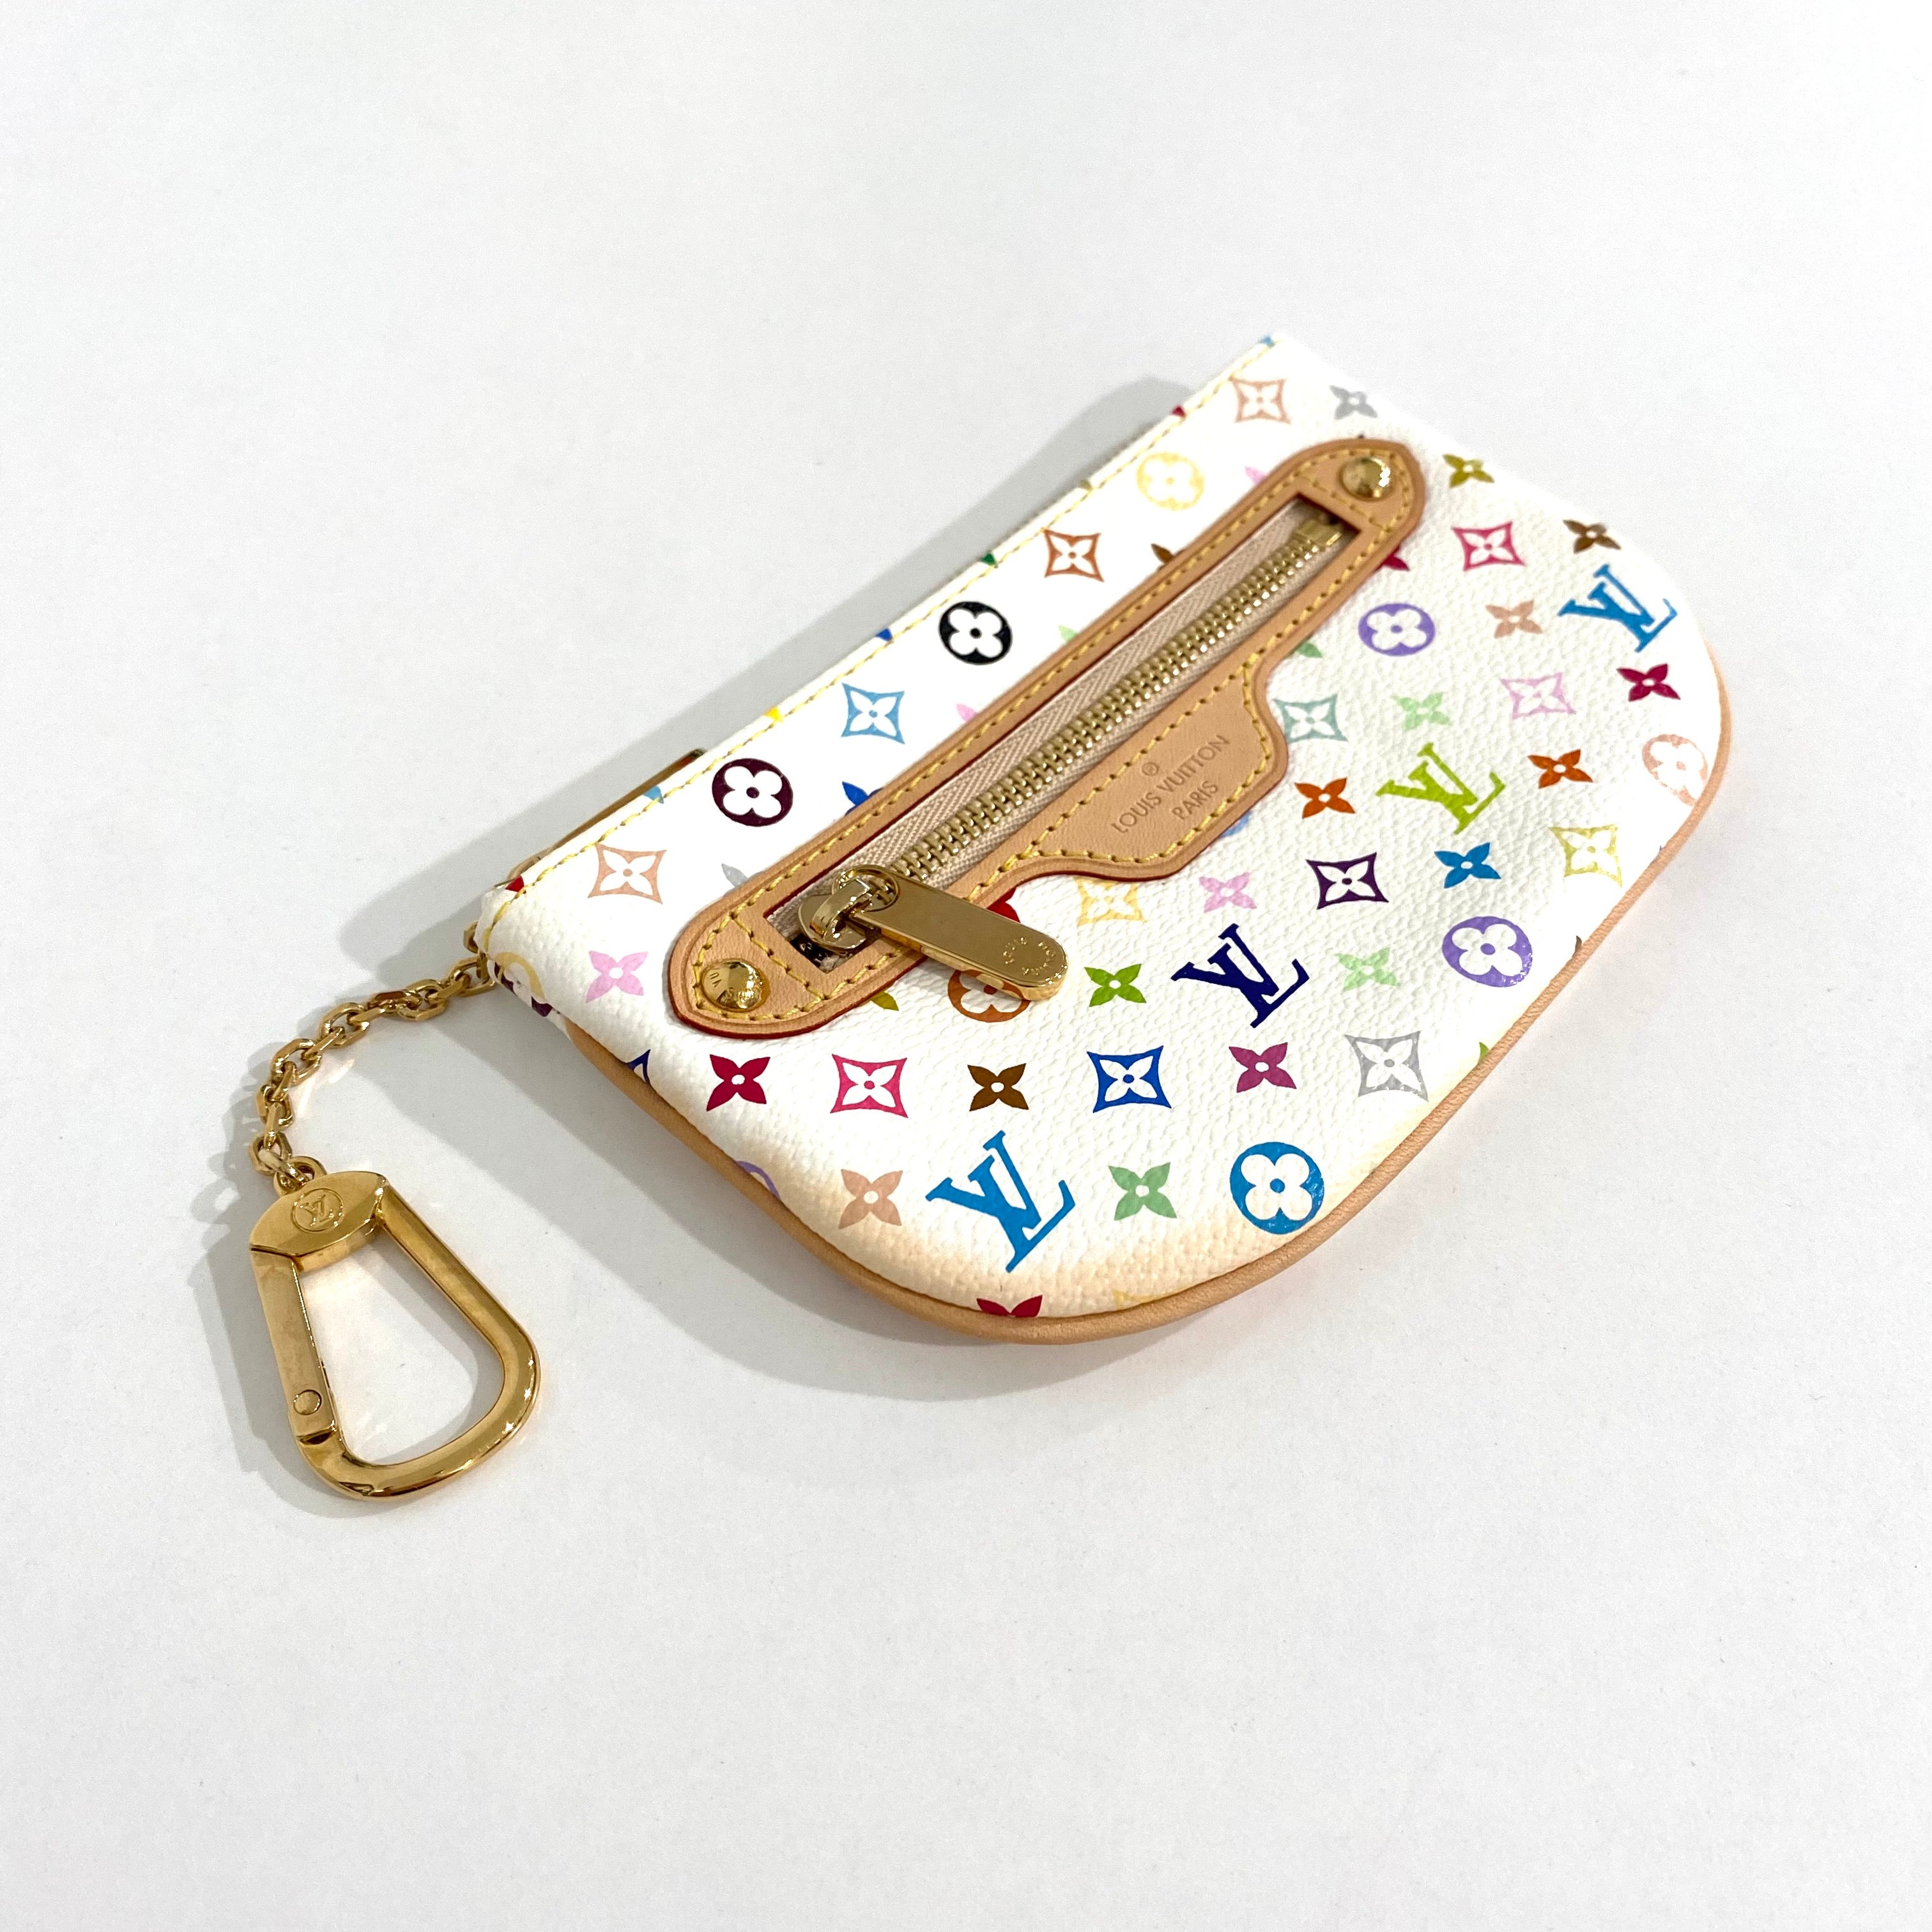 Love this combo 🤍🌙  Lv key pouch, Bags designer fashion, Louis vuitton  key pouch